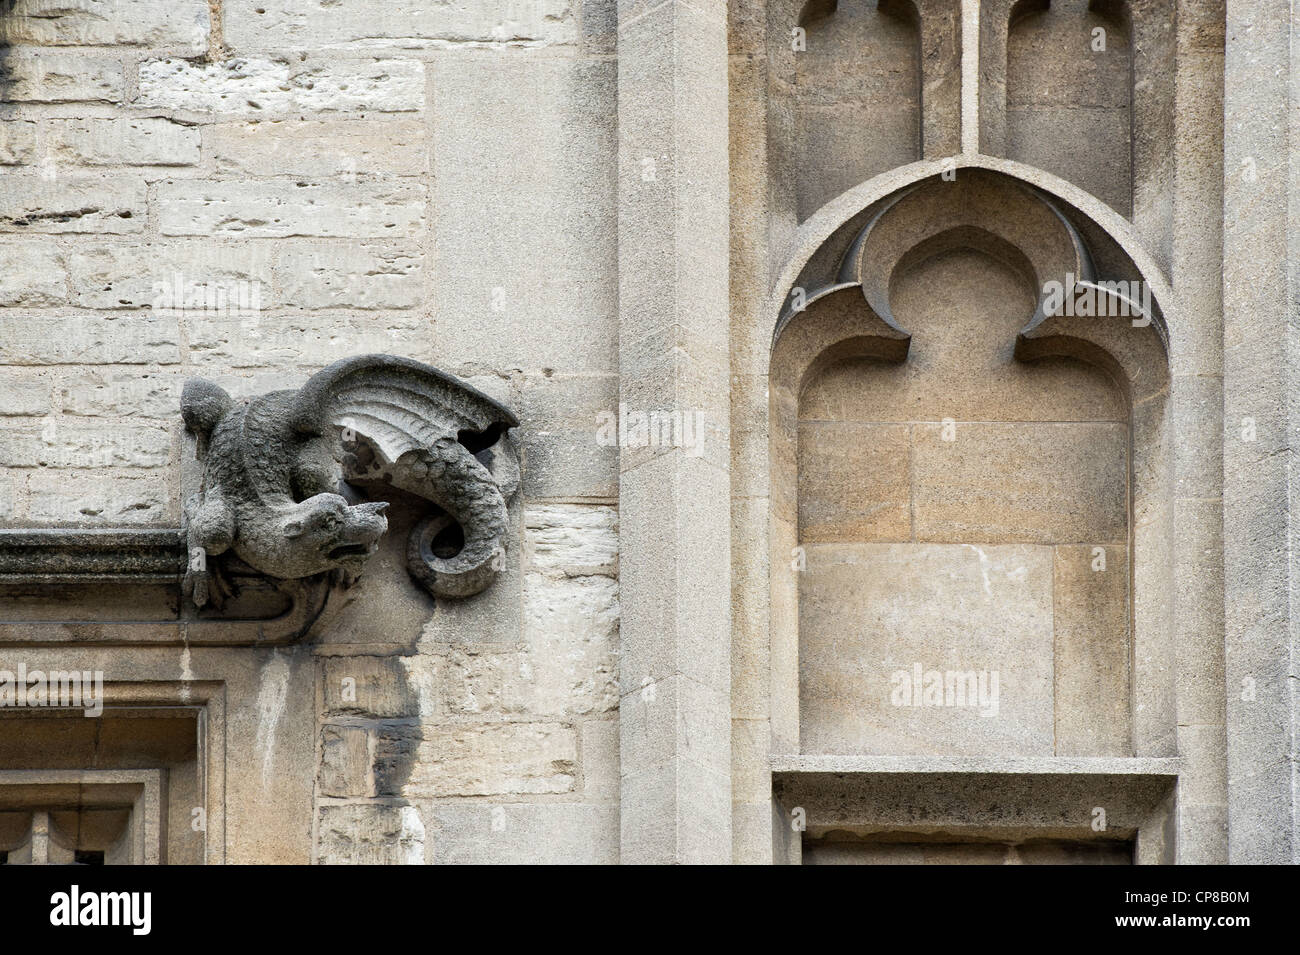 Dragon / Serpent stone carving, Oxford University. Oxford, Oxfordshire, England England Stock Photo